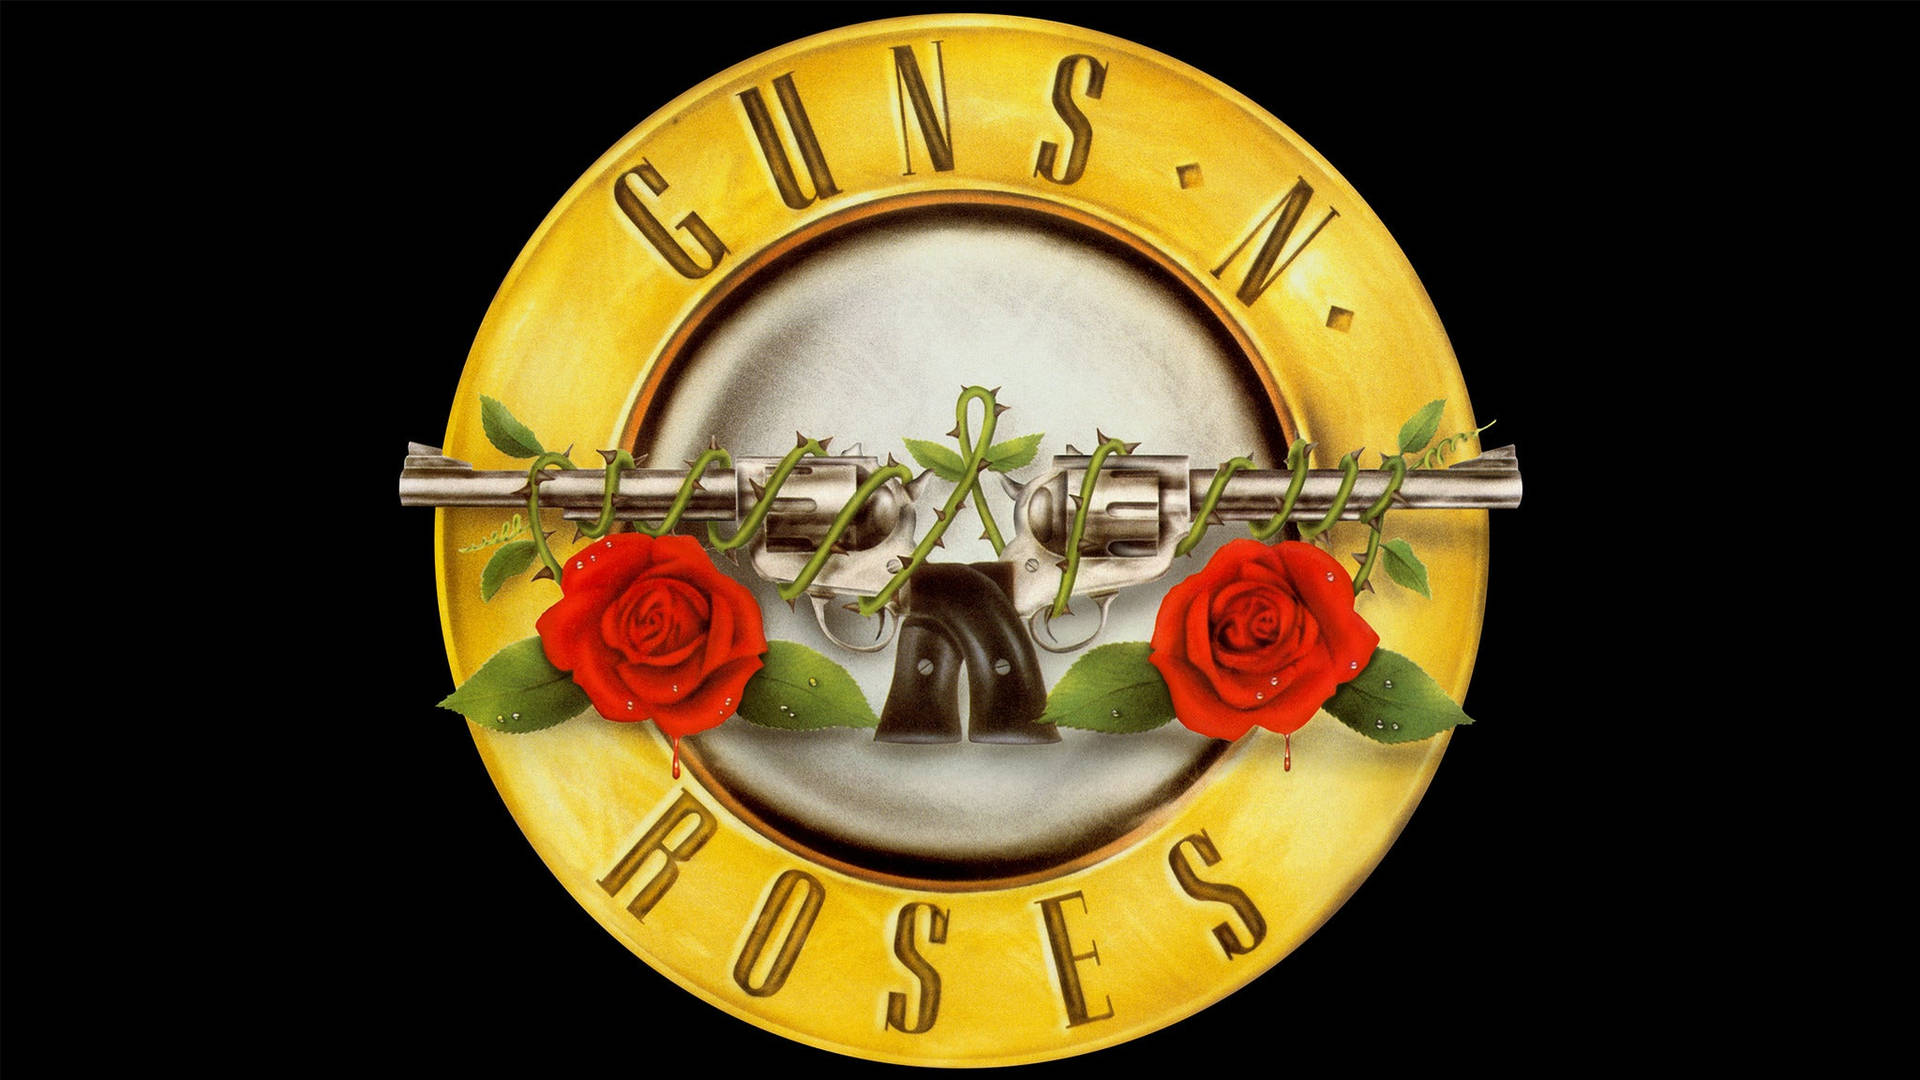 Cincinnatispelar Guns N Roses-konsert. Wallpaper